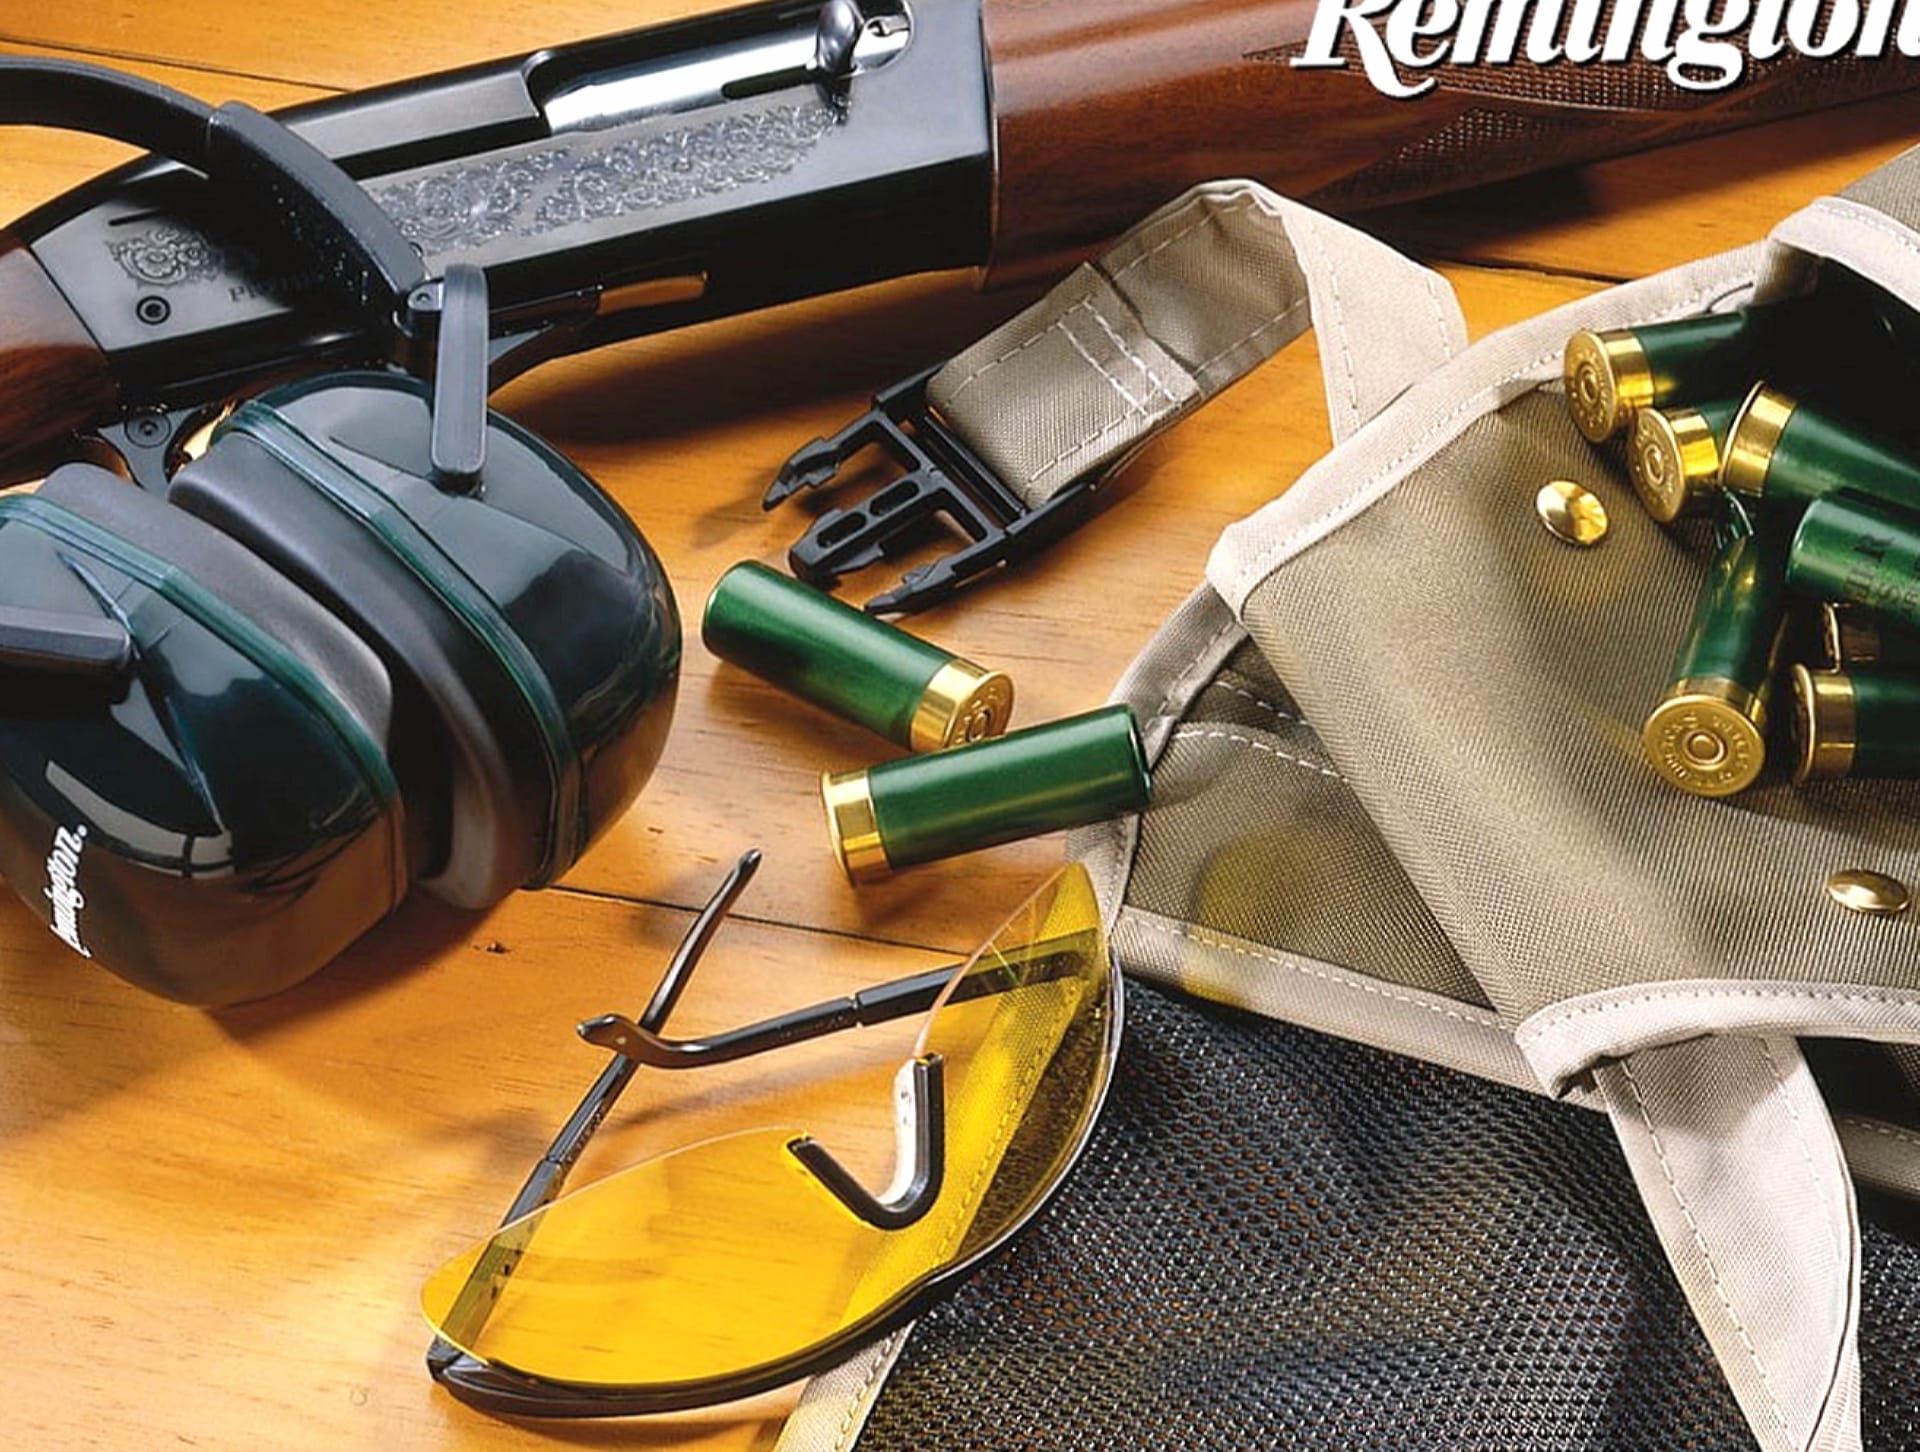 Remington Shotgun at 2048 x 2048 iPad size wallpapers HD quality